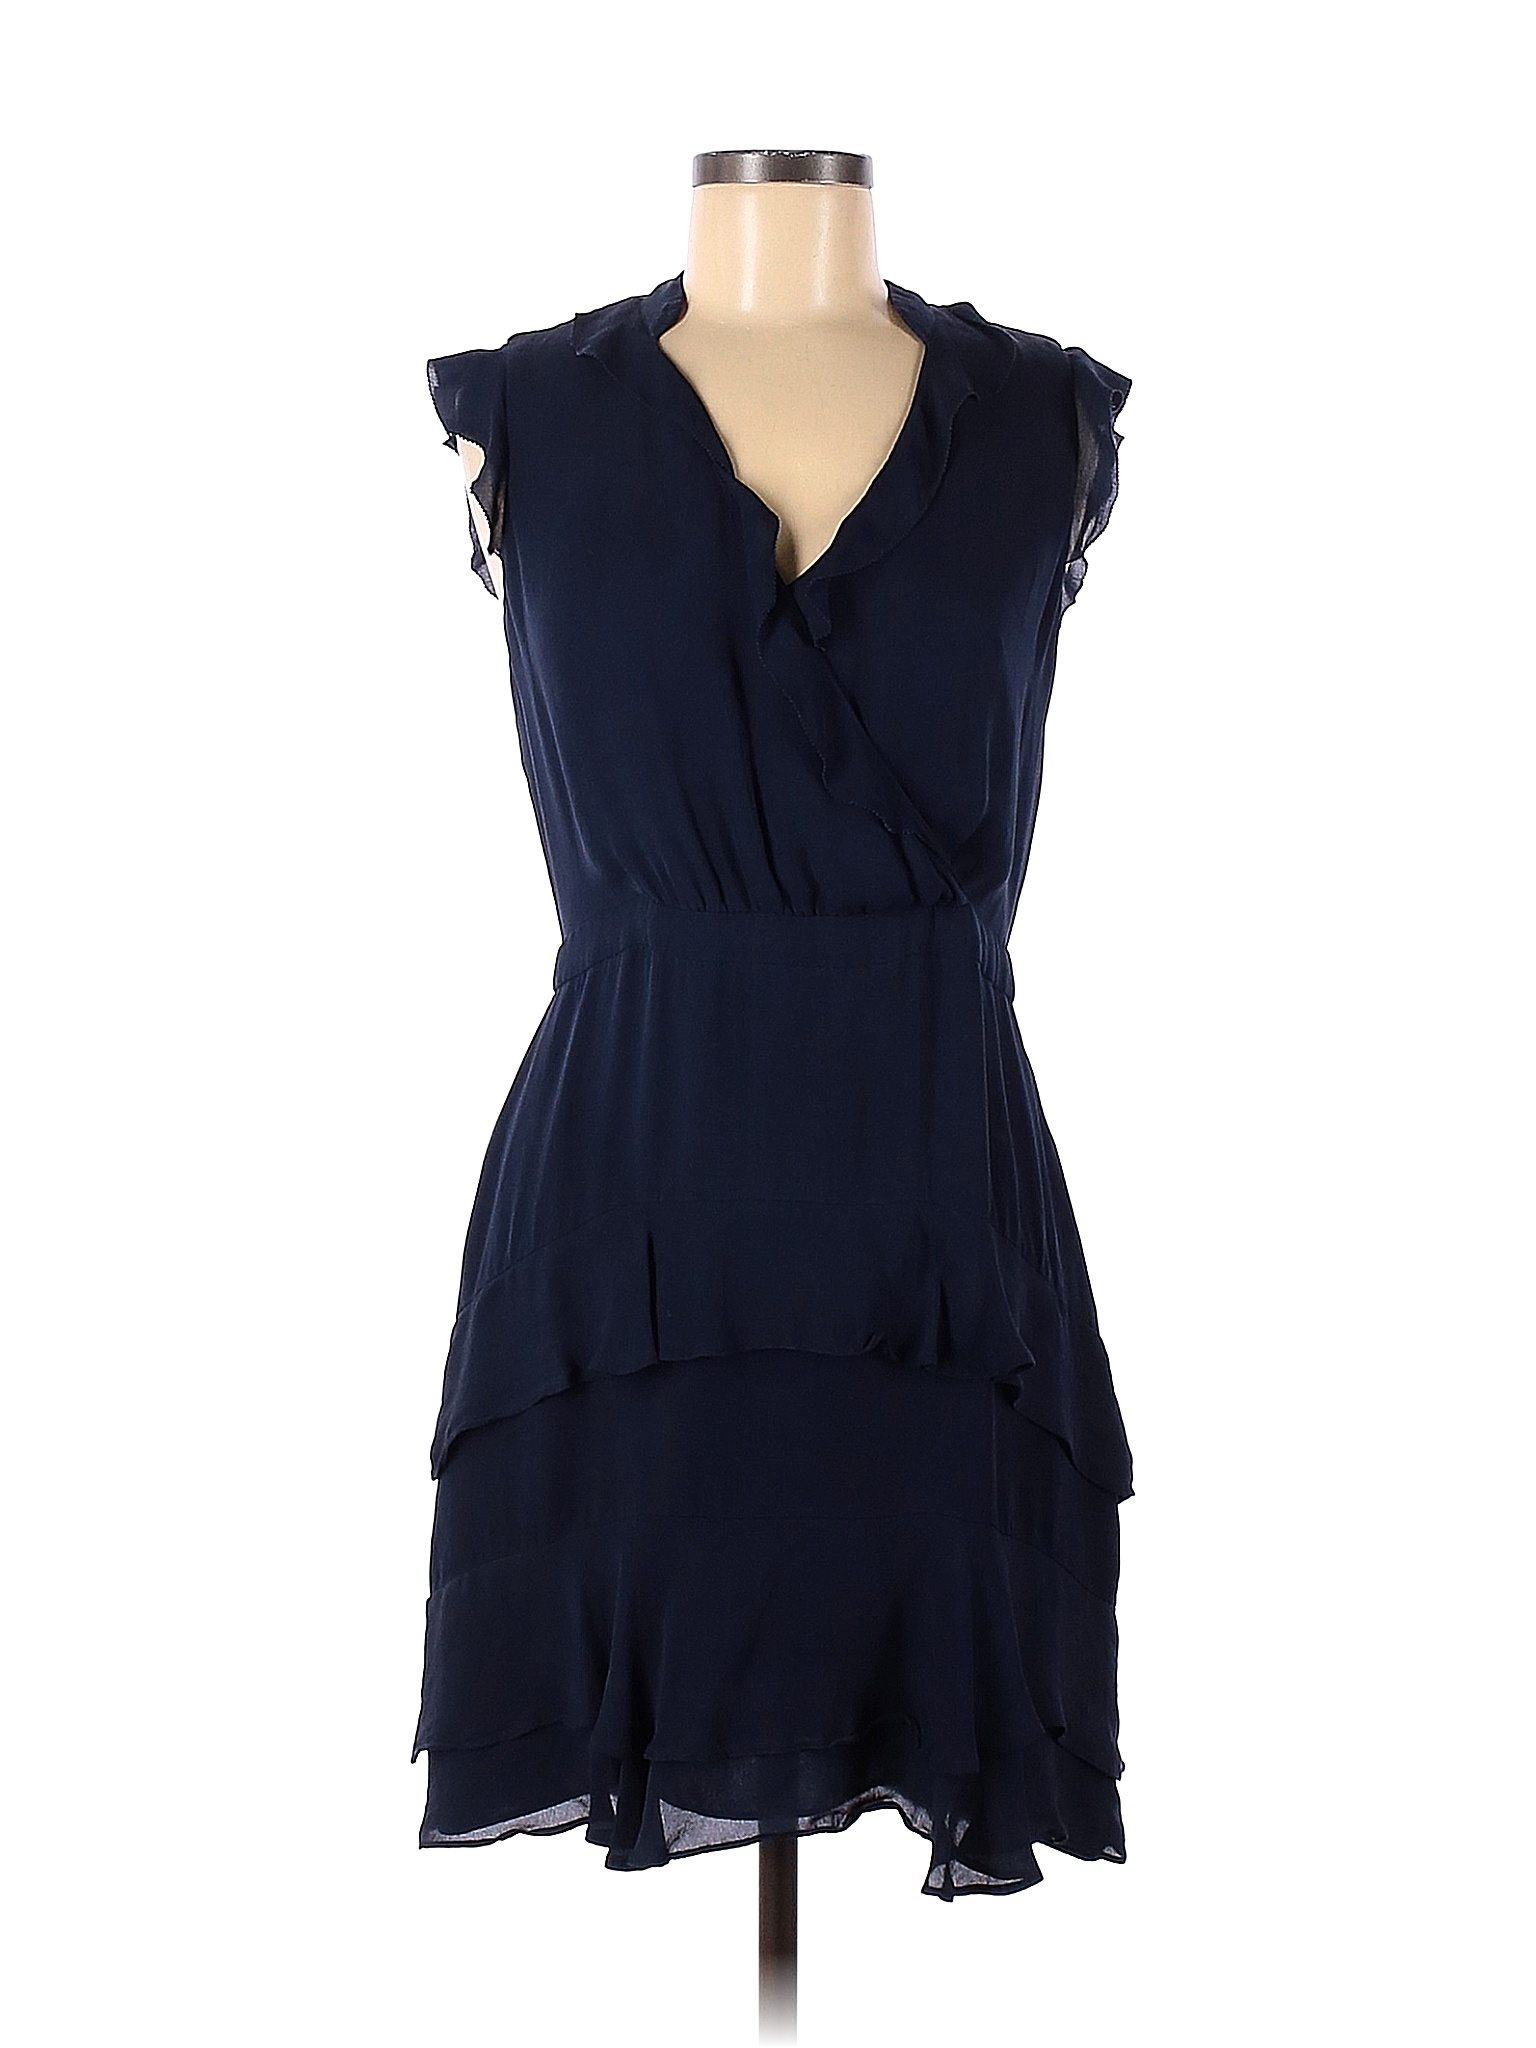 Parker 100% Silk Solid Blue Navy Tangia Dress Size 8 - 73% off | thredUP